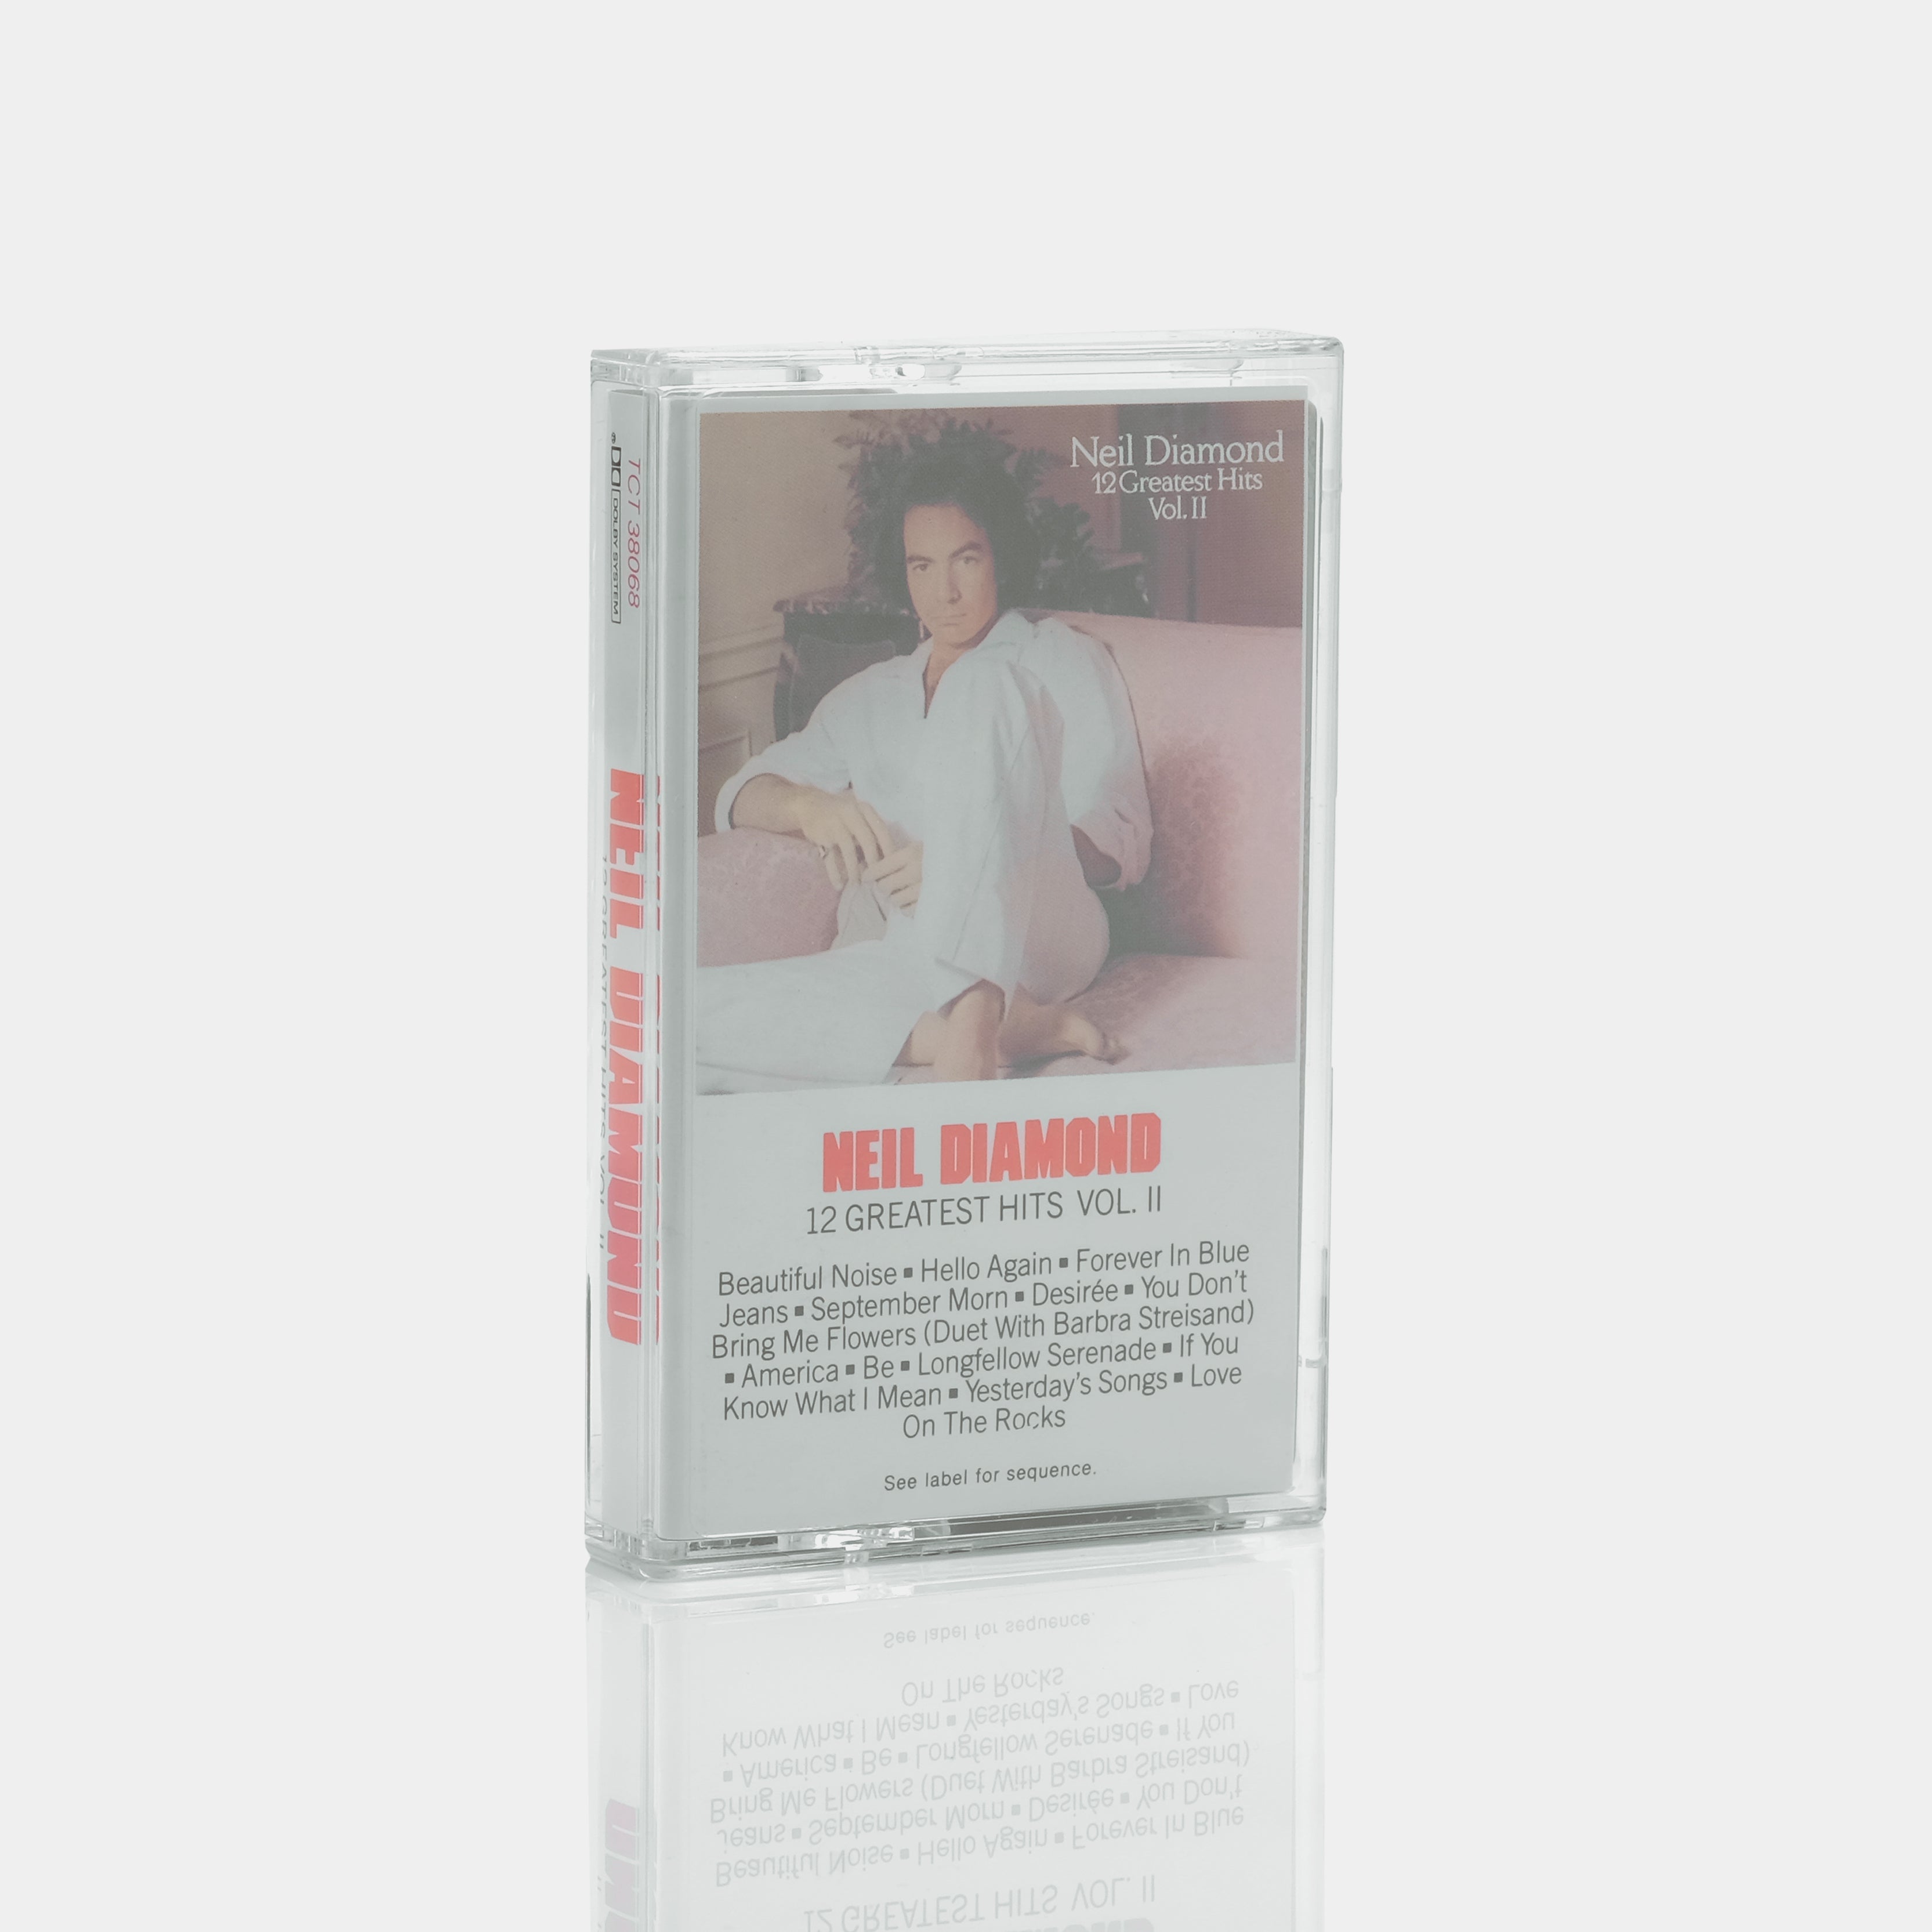 Neil Diamond - 12 Greatest Hits, Volume II Cassette Tape